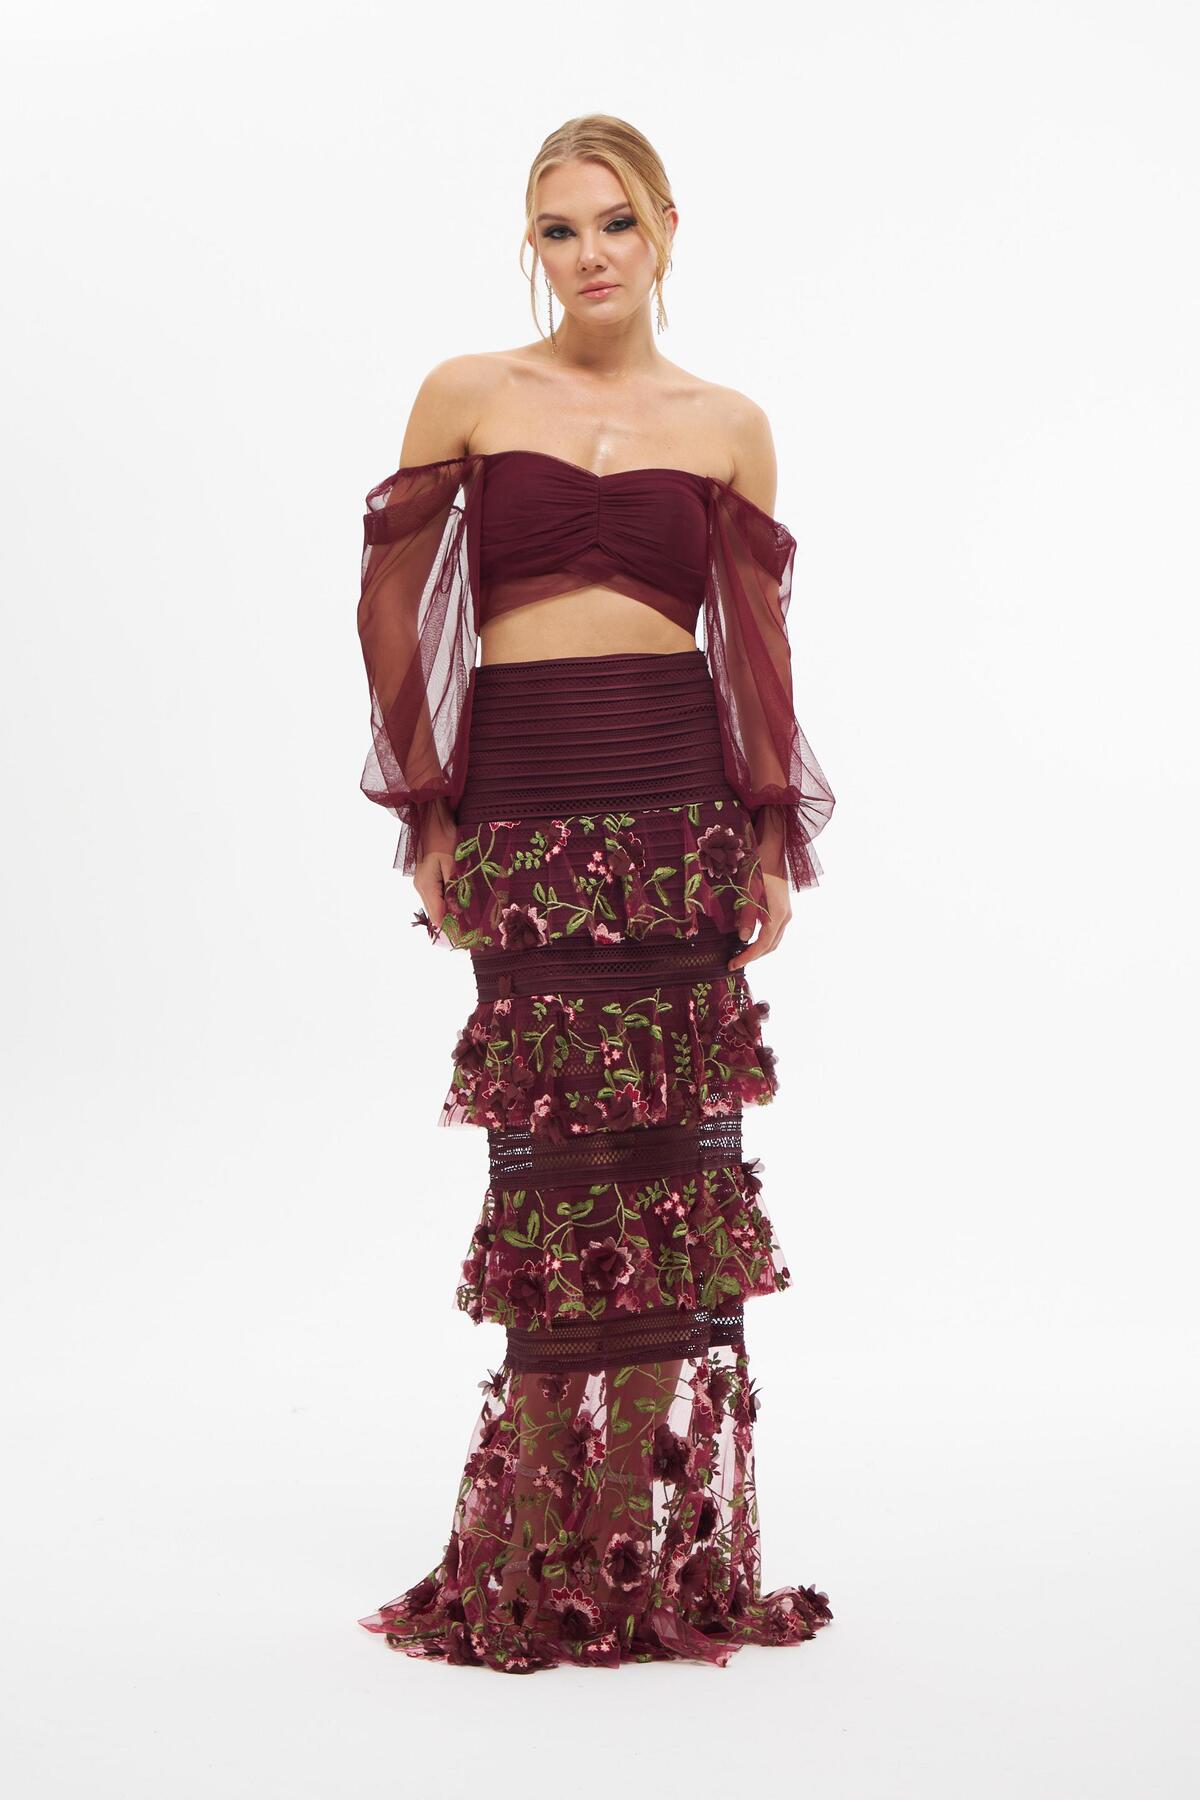 Carmen Burgundy Skirt Tiered Bustier Suit